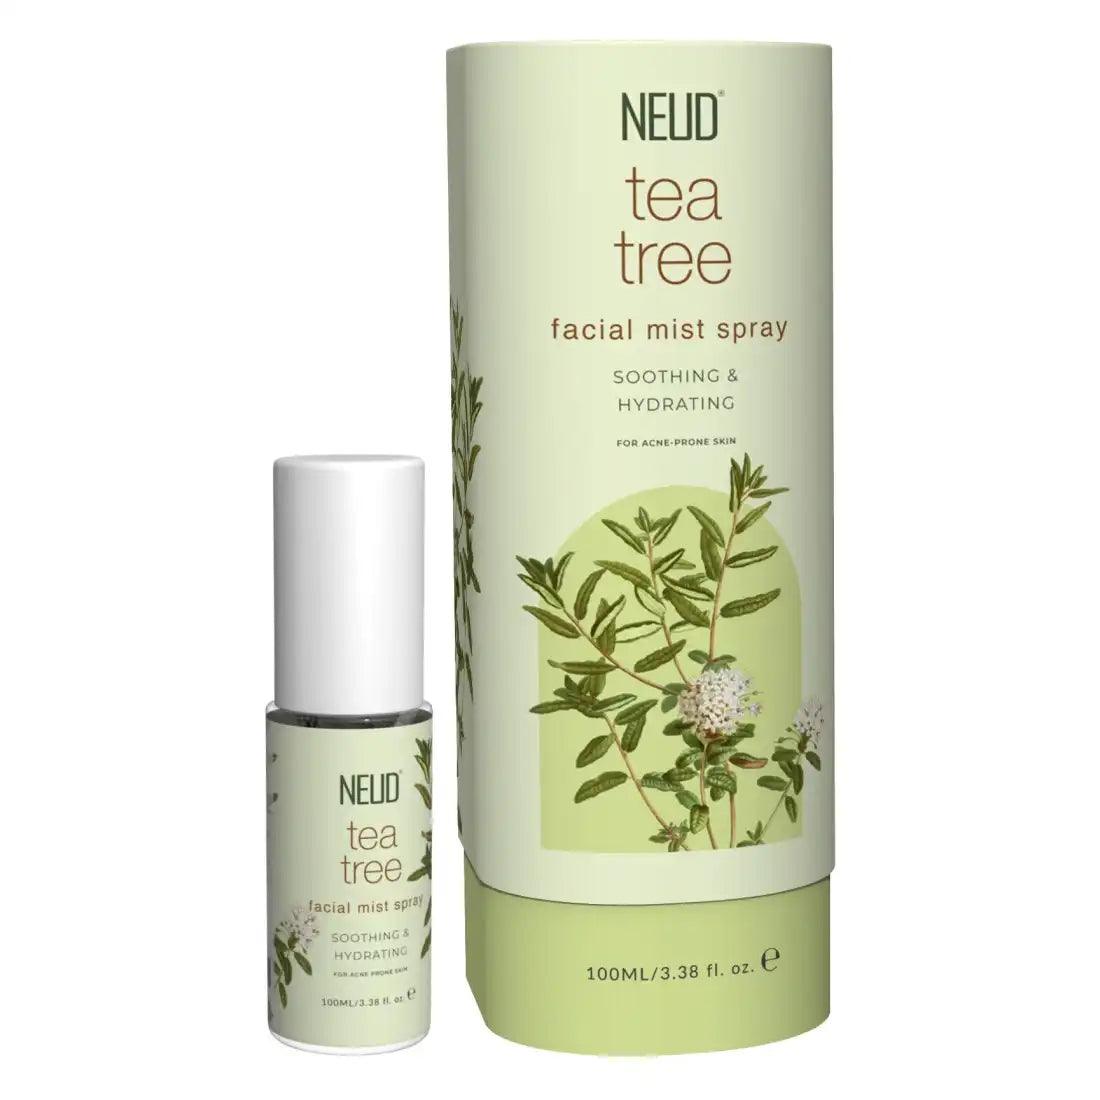 NEUD Tea Tree Facial Mist Spray is easy to carry - everteen-neud.com